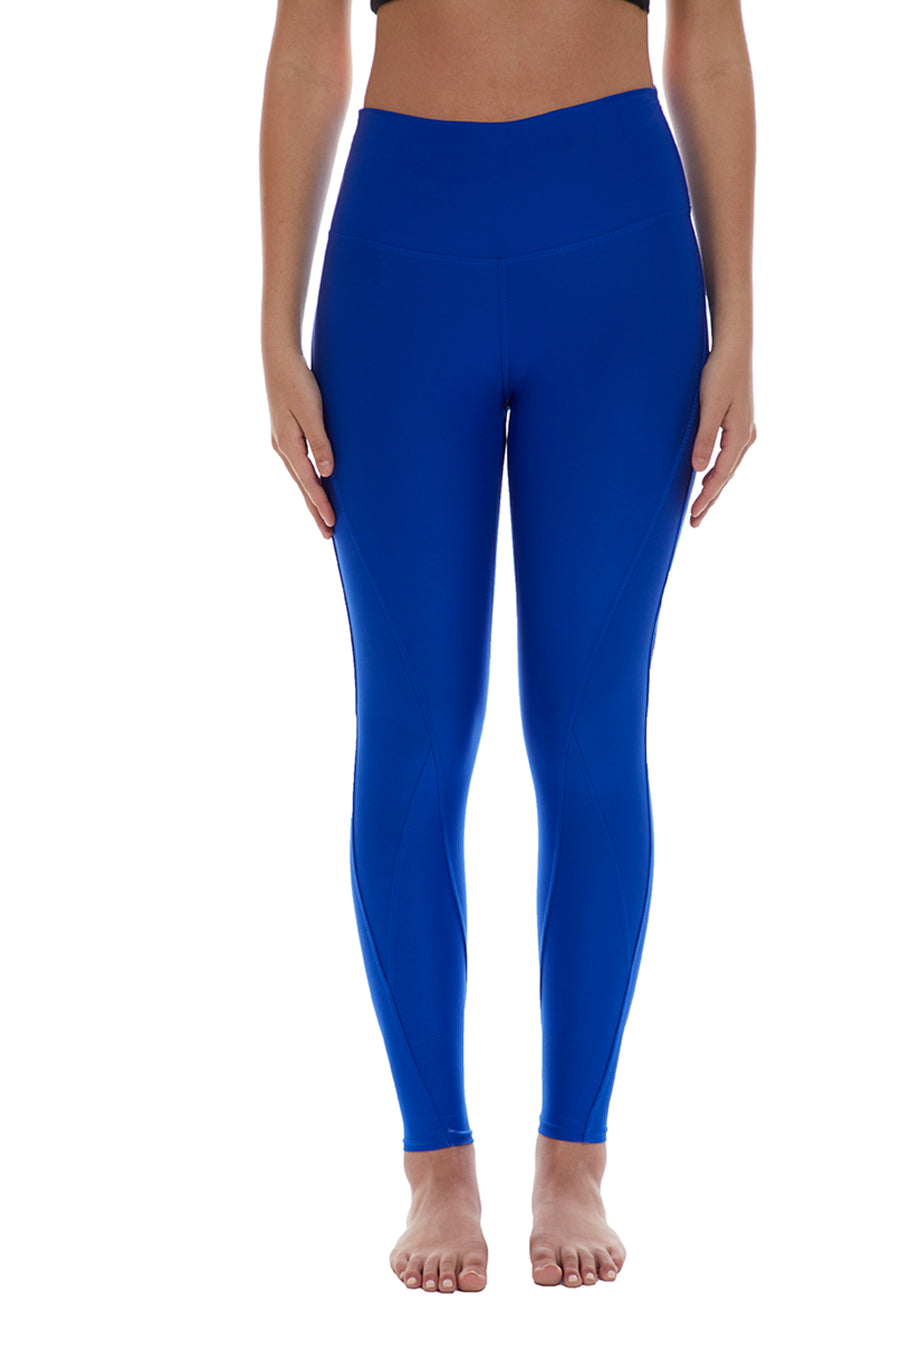 High Compression Recycled Legging - Royal Blue – Soulgani Activewear